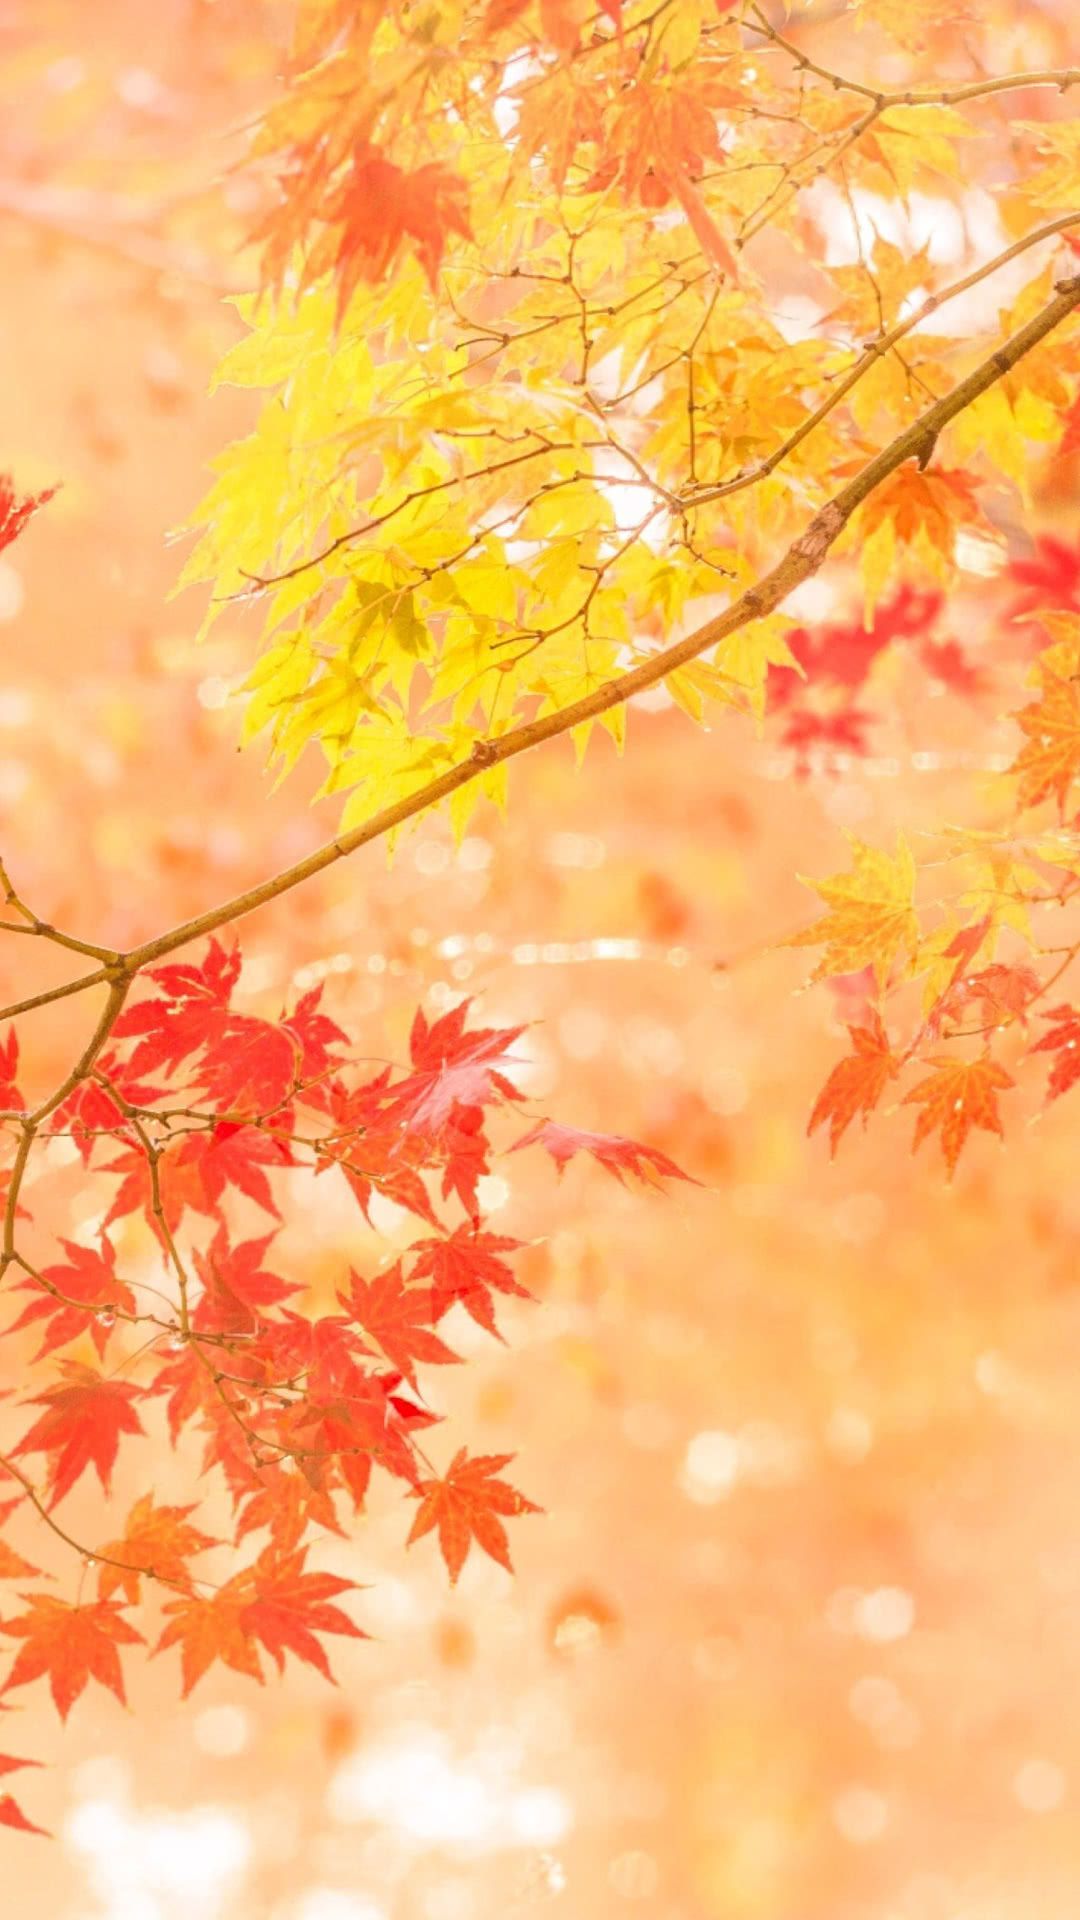 Leaves Fall. Apple wallpaper iphone, Islamic wallpaper, Digital art photography